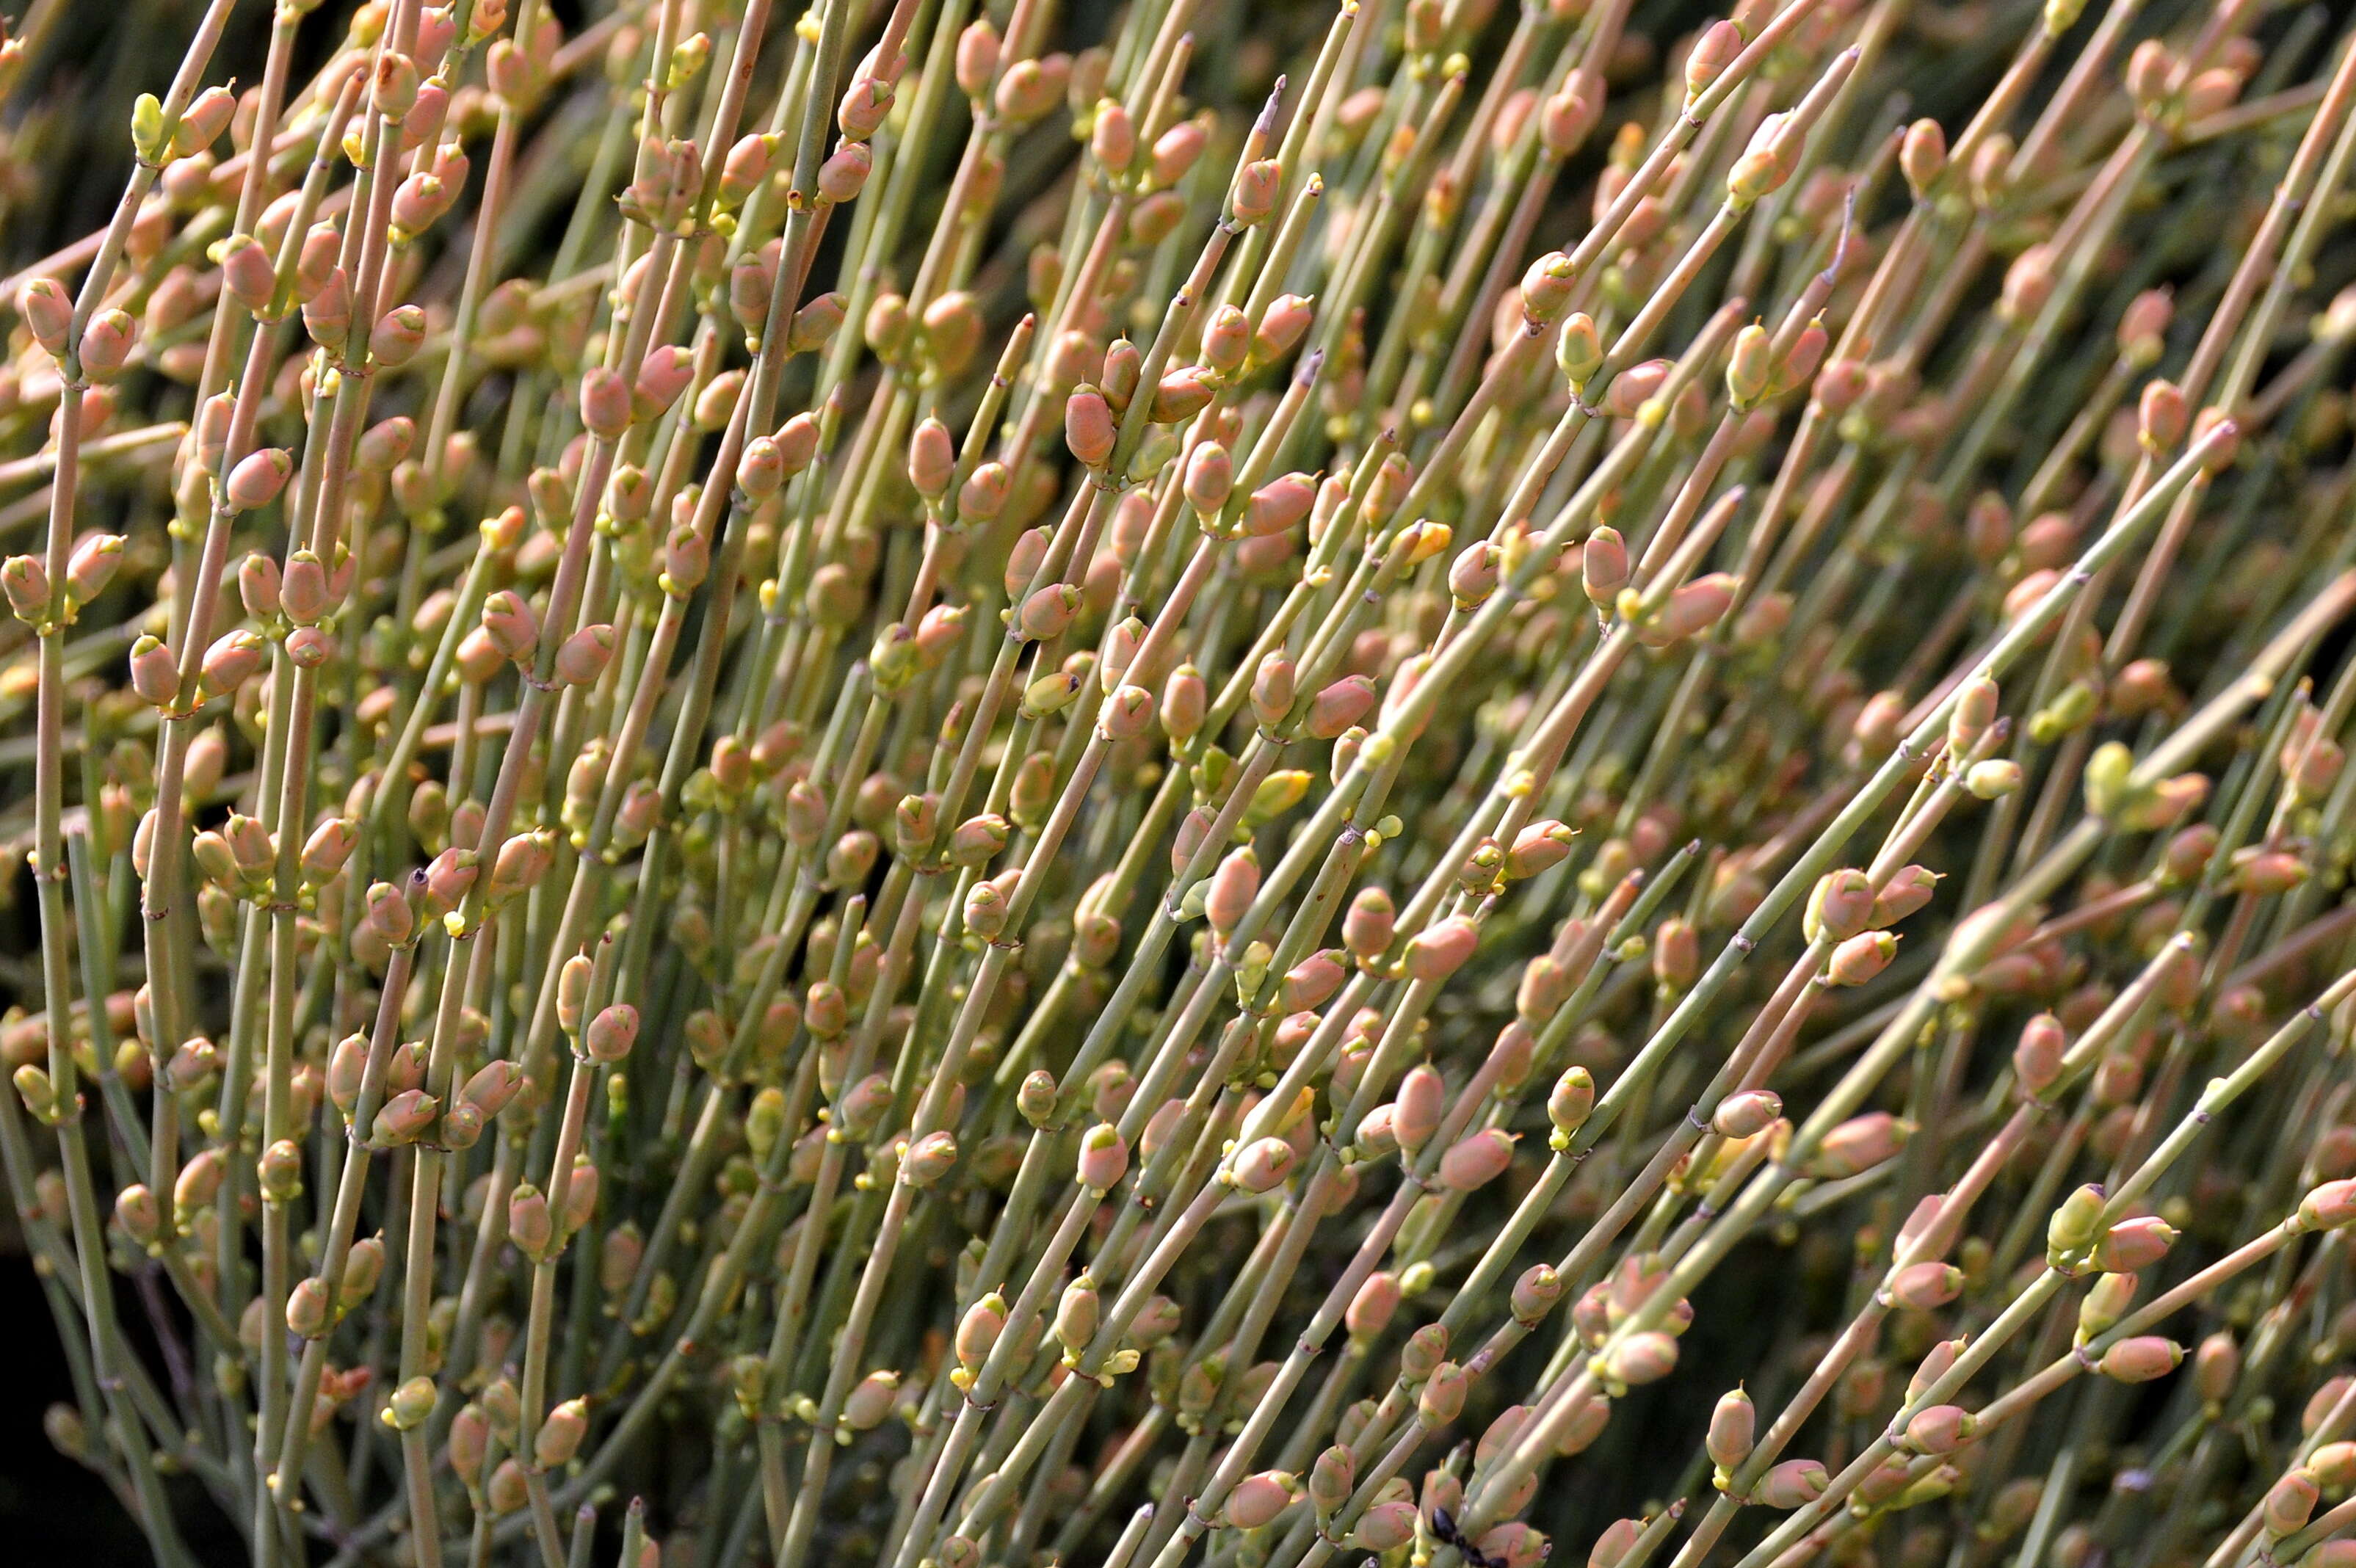 Image of Ephedra fragilis subsp. fragilis